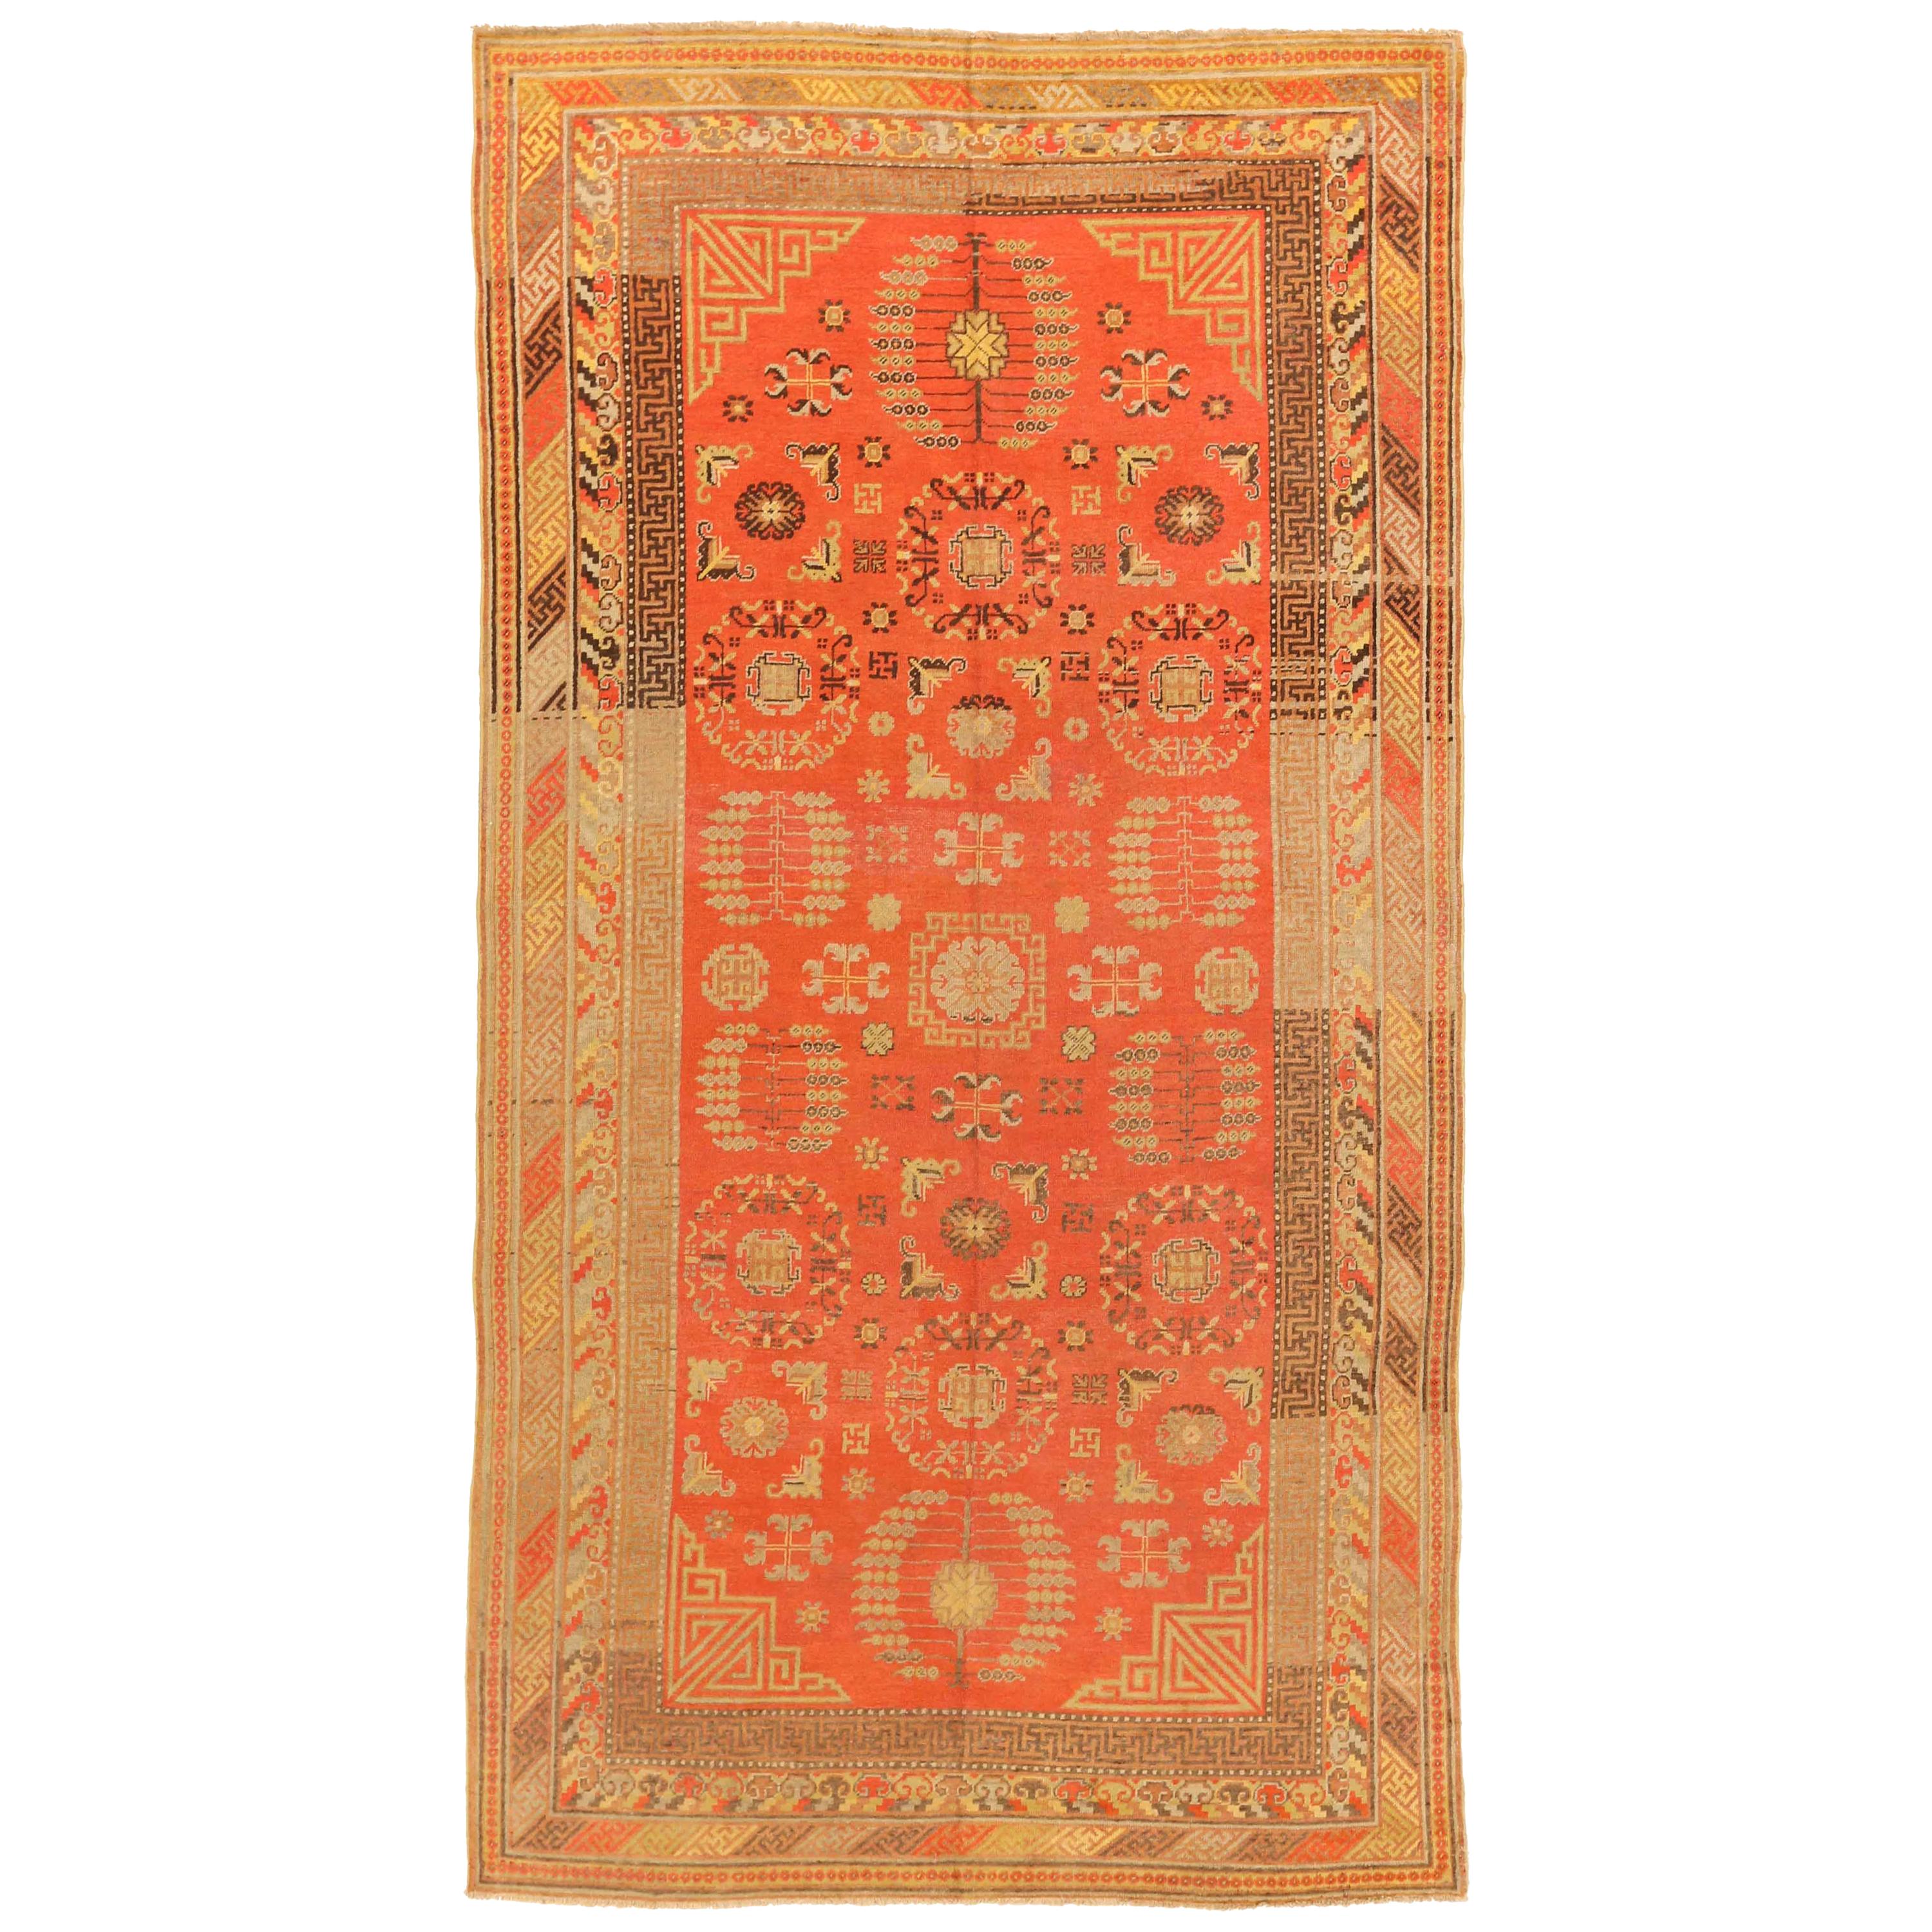 Antique Central Asian Rug Khotan Design with Unique Oriental Patterns circa 1920 For Sale